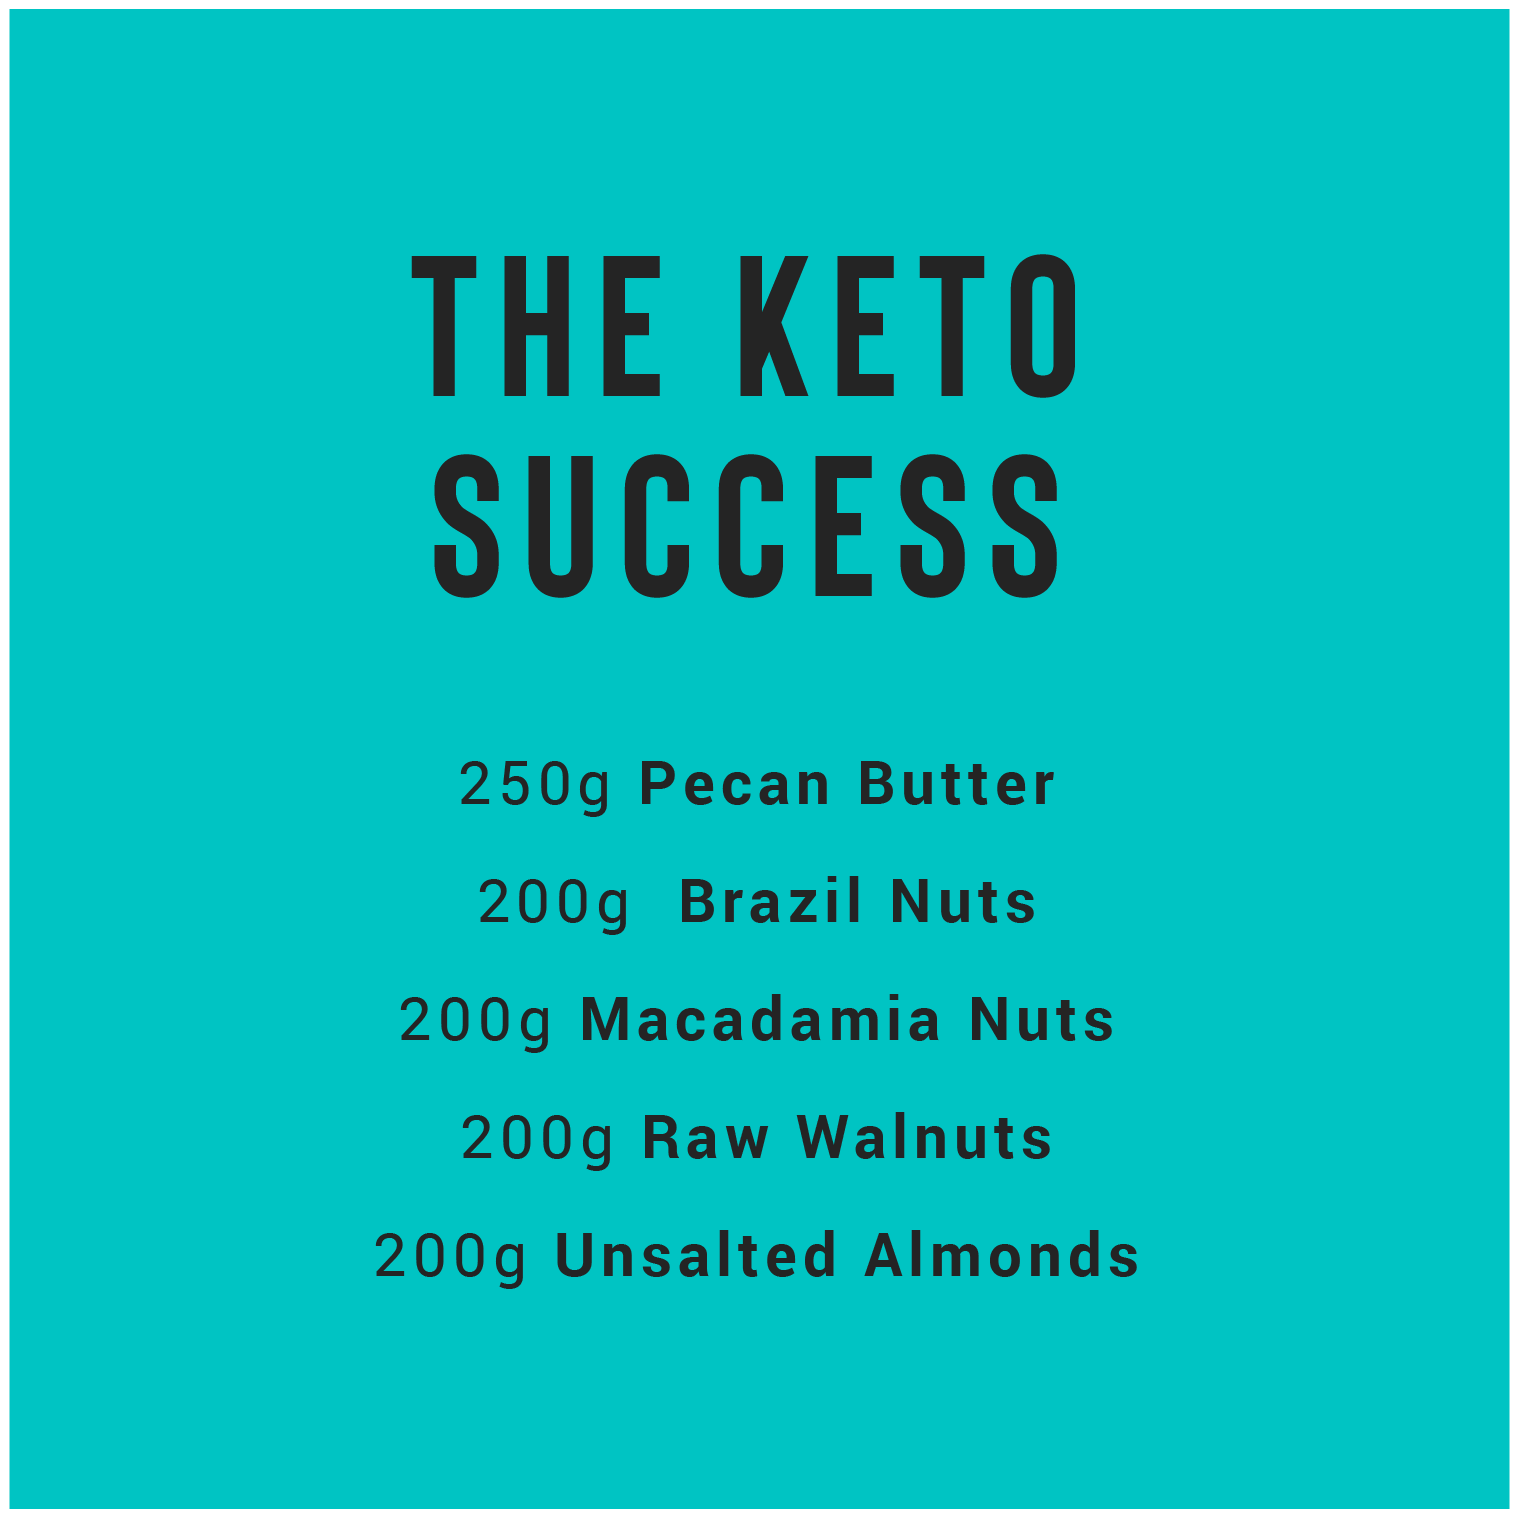 THE KETO SUCCESS-Subscription Box-The Roasted Nut Inc.